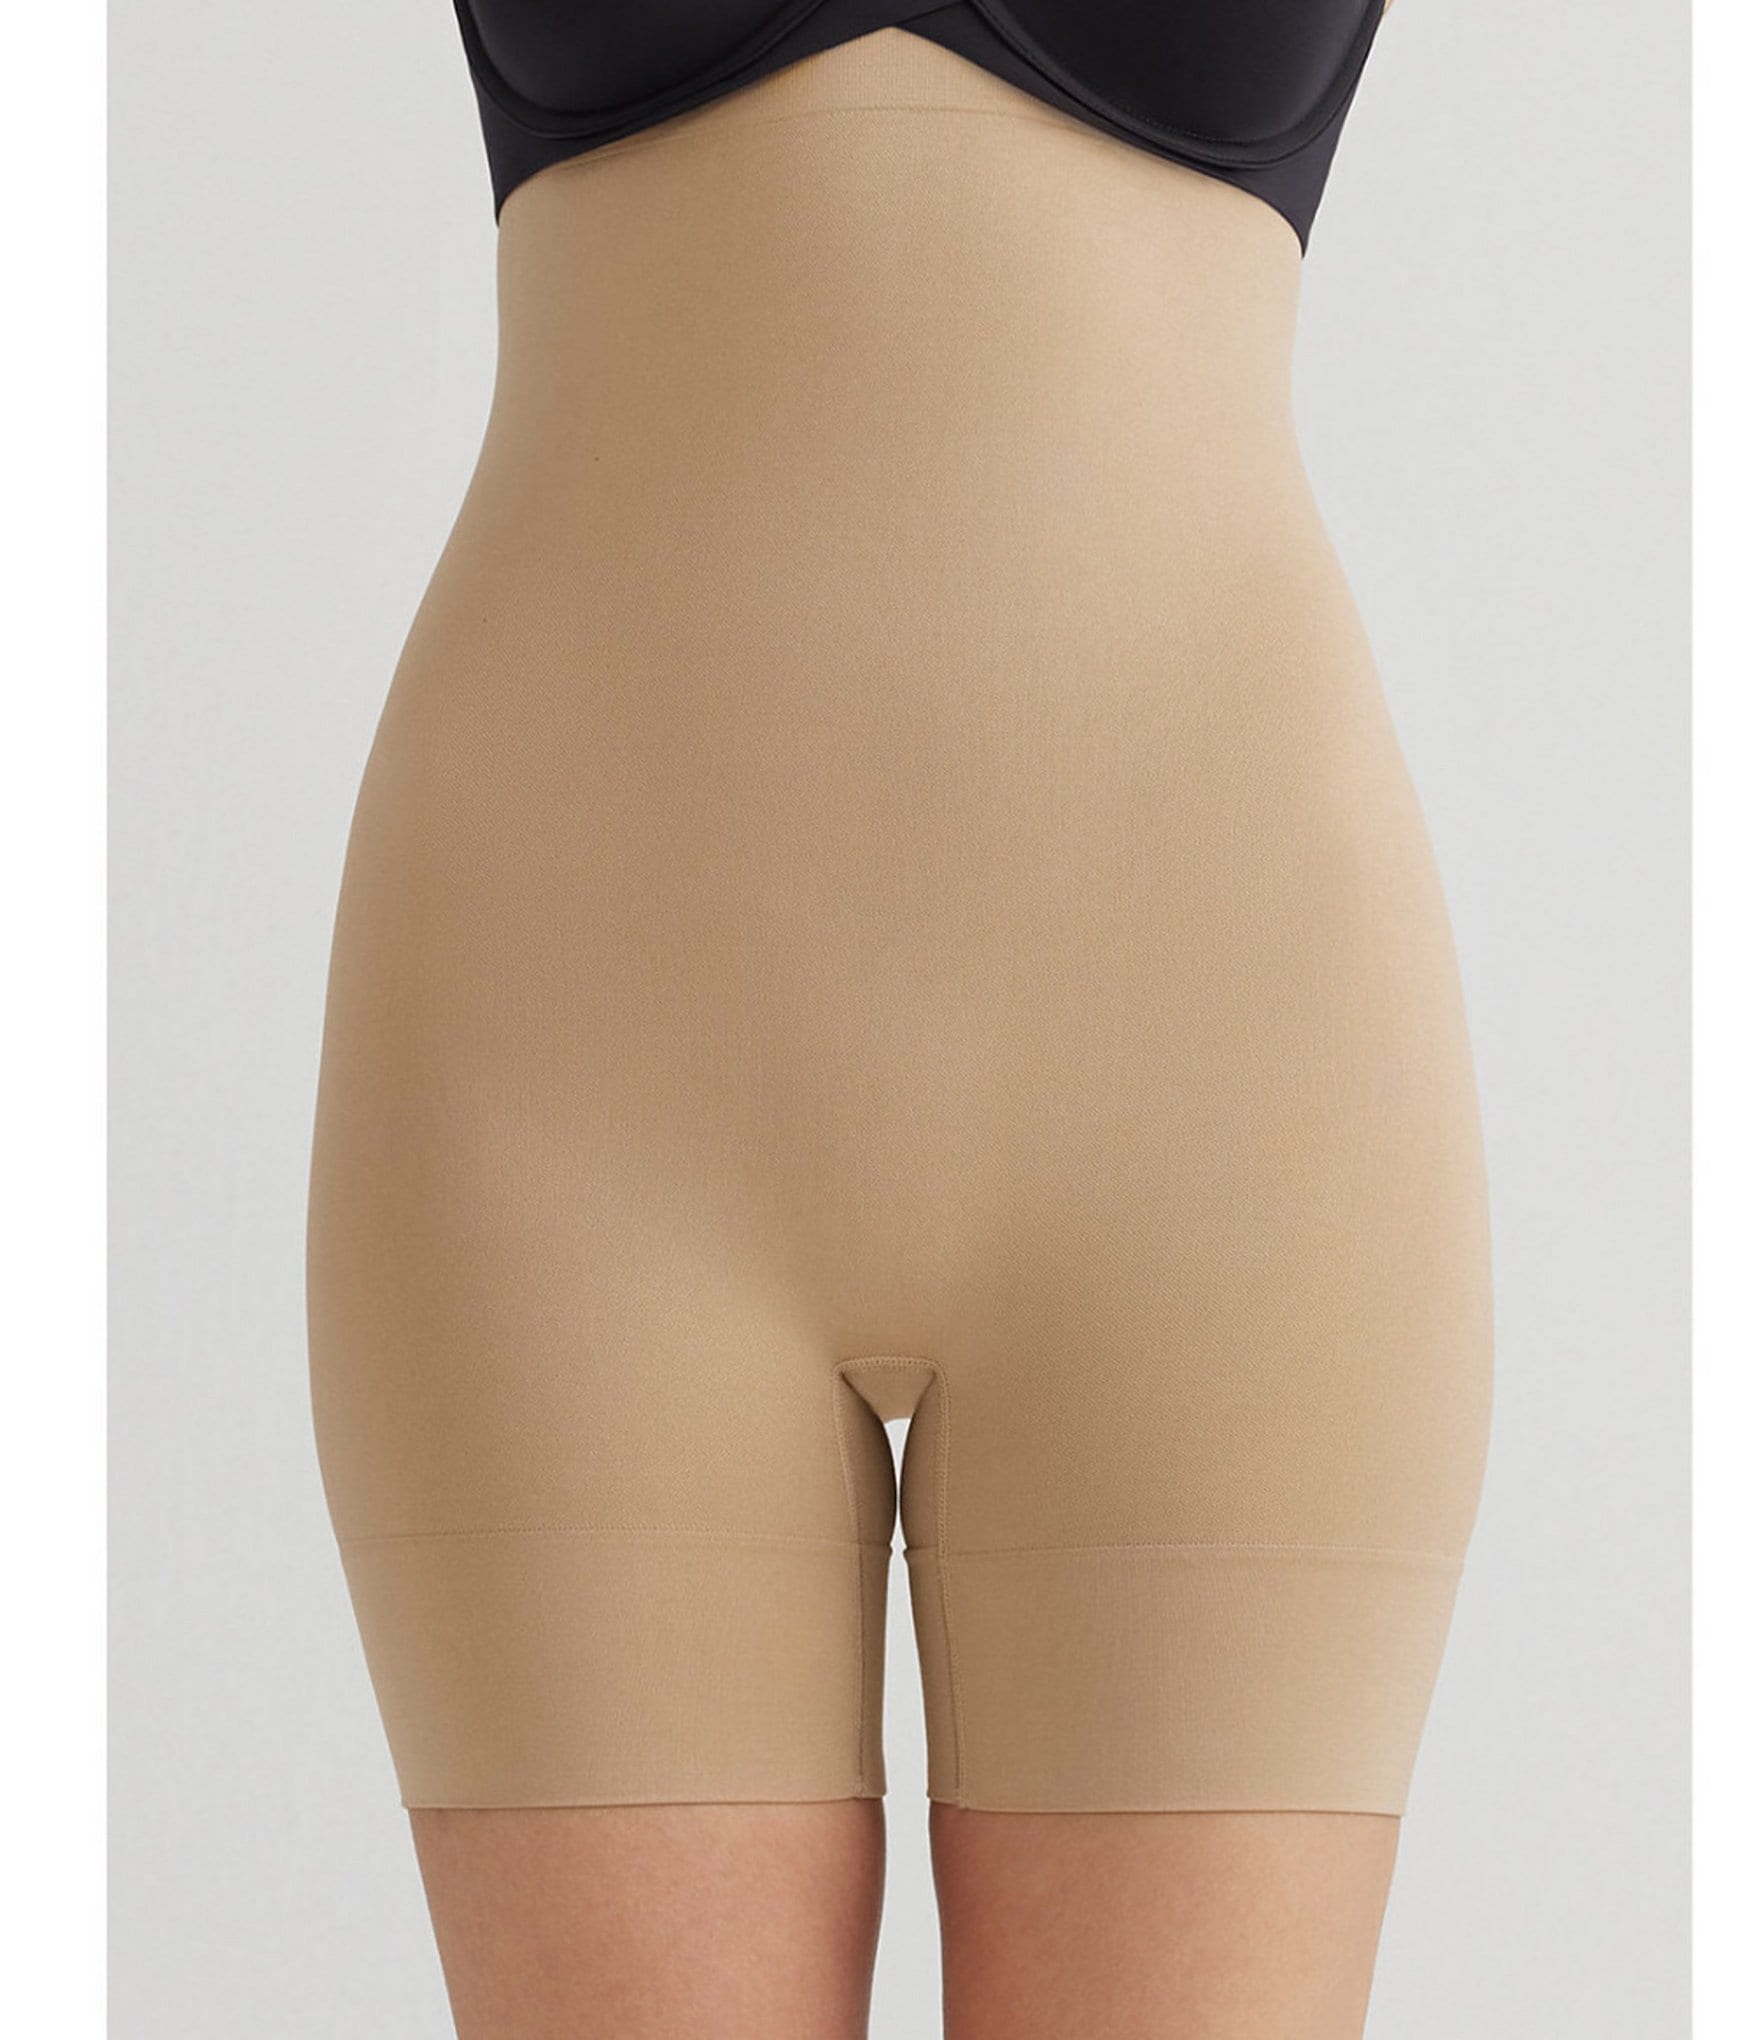 n.fiosta Women's Slip Shorts for Under Dresses, Seamless Shapewear